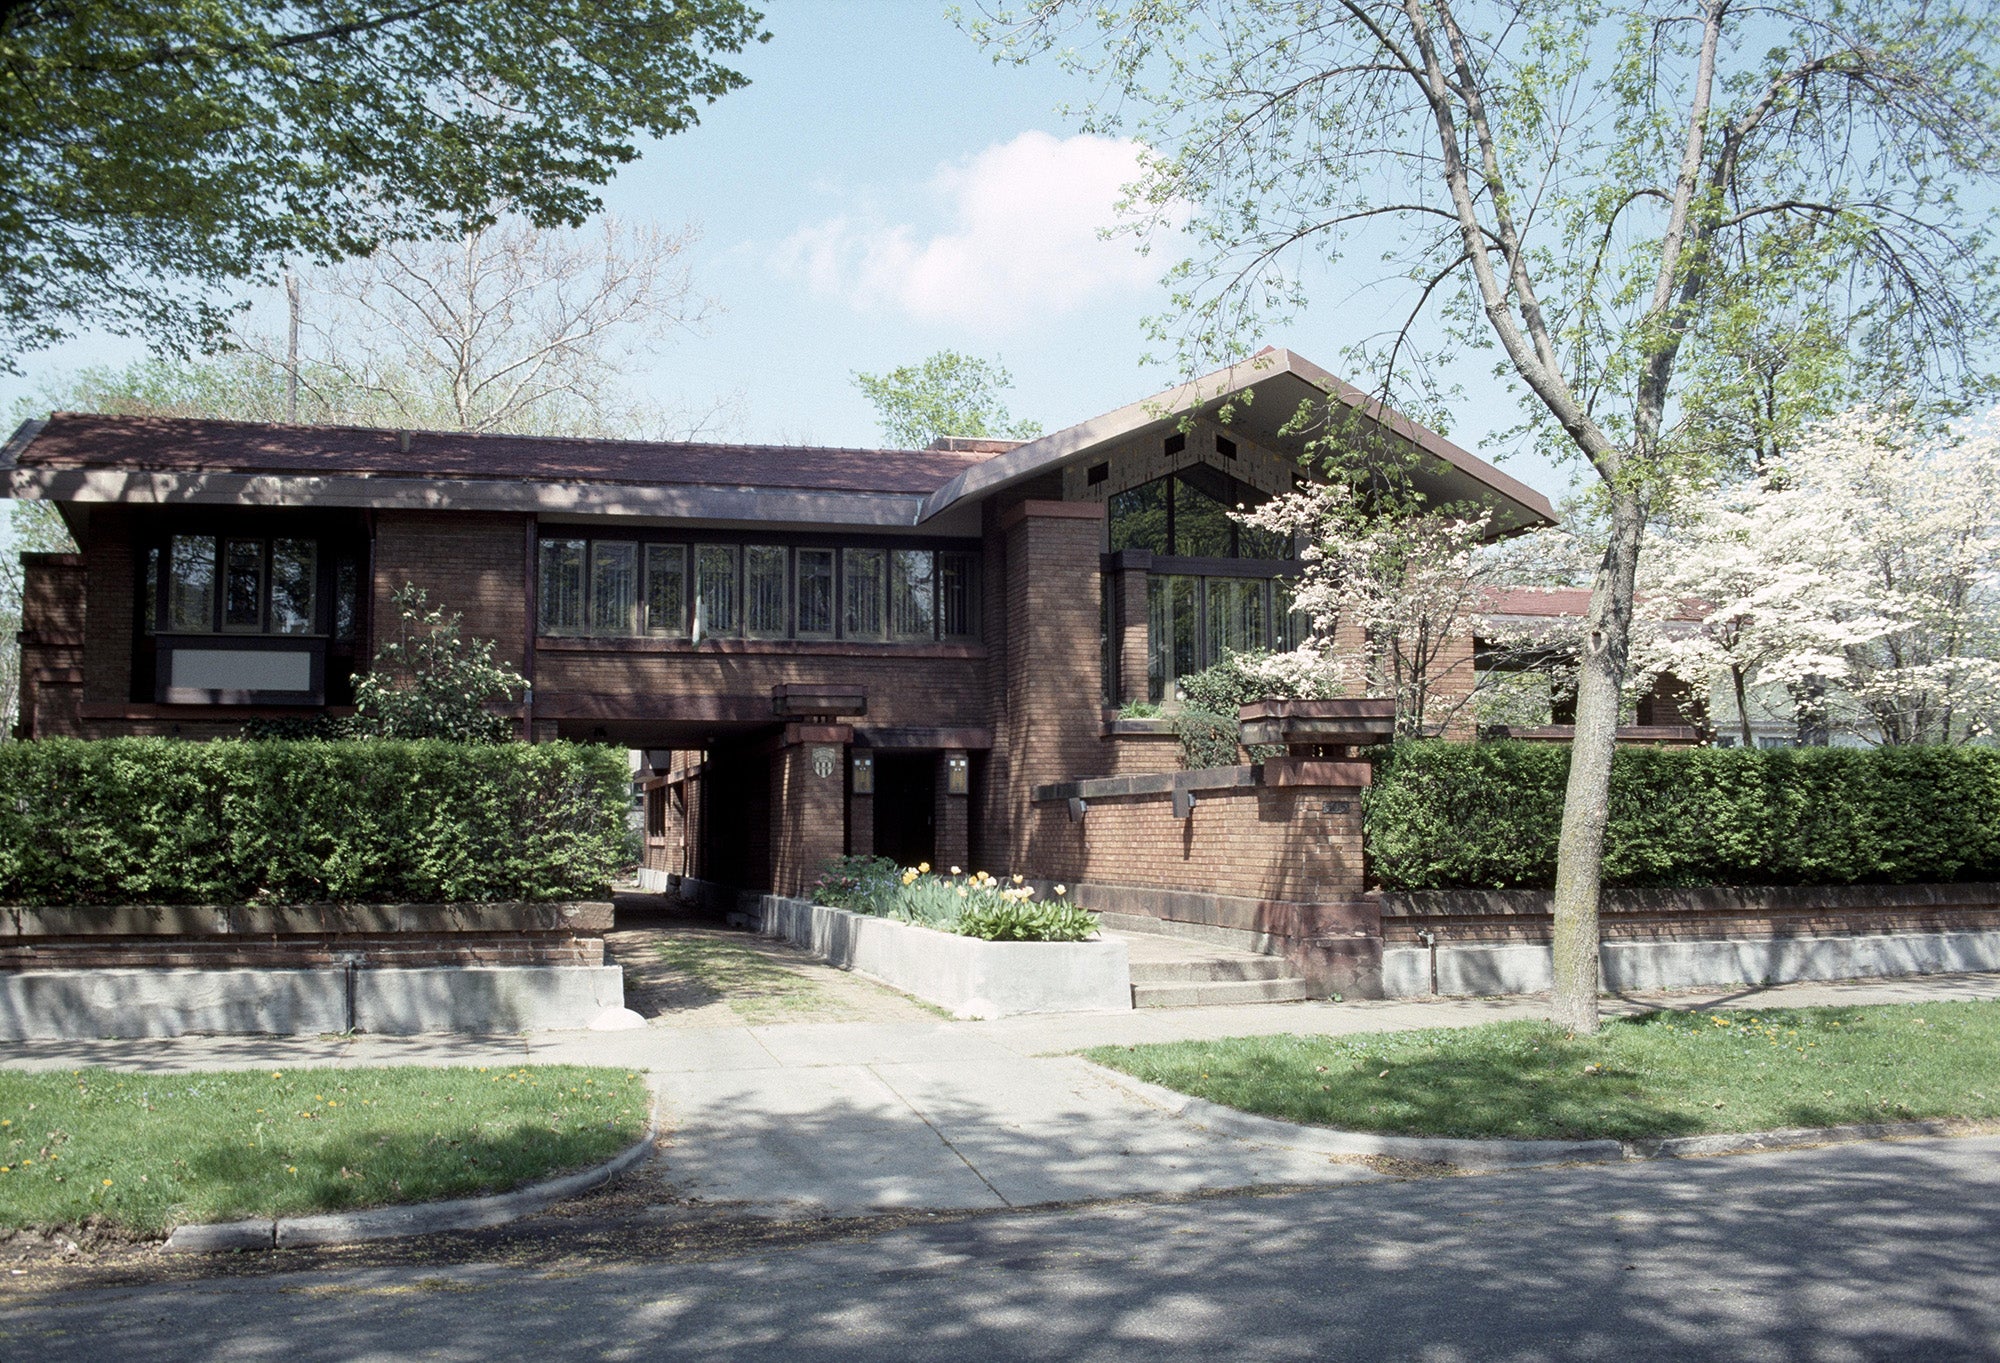 The David M. Amberg House